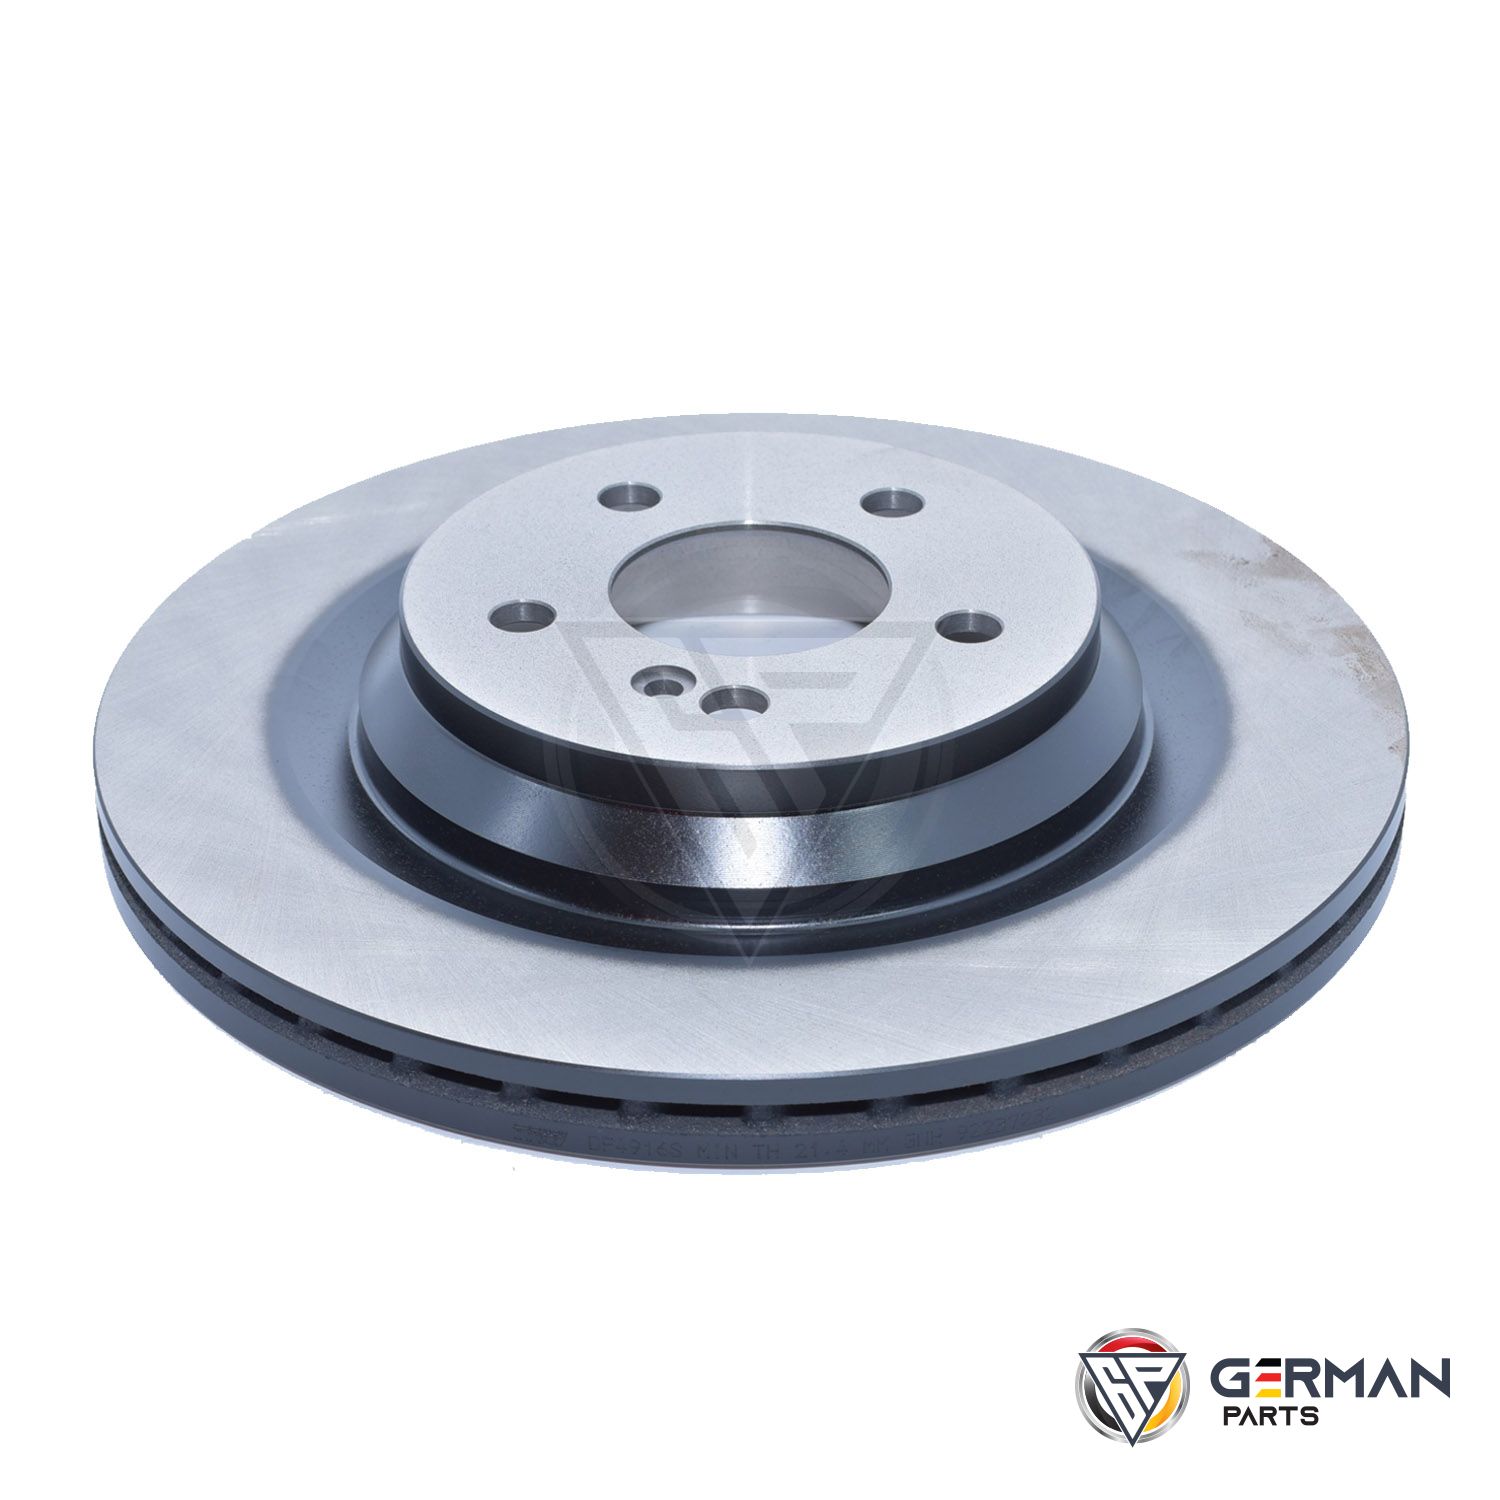 Buy TRW Rear Brake Disc 2214230412 - German Parts